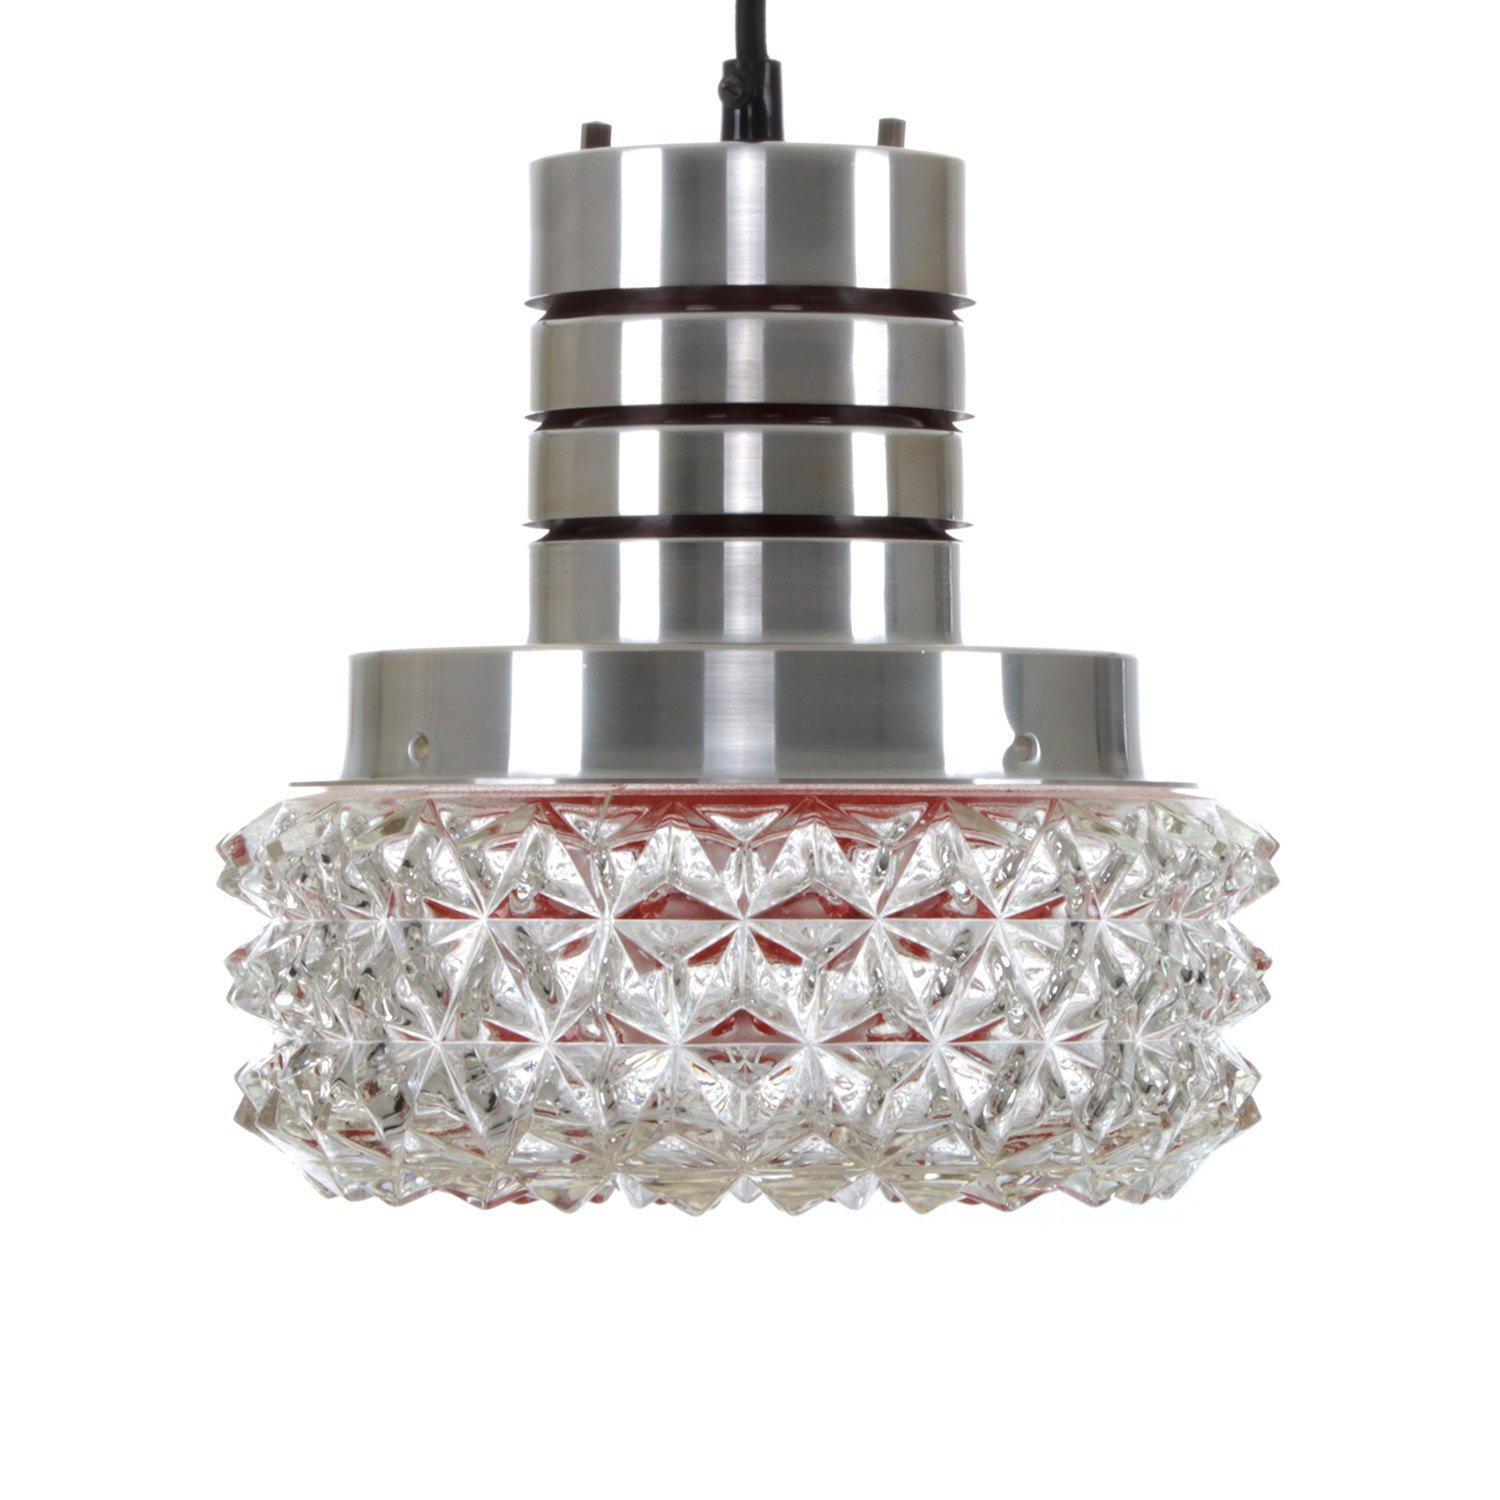 Crystal Glass and Aluminium Lamp, 1960s Scandinavian Hanging Light For Sale